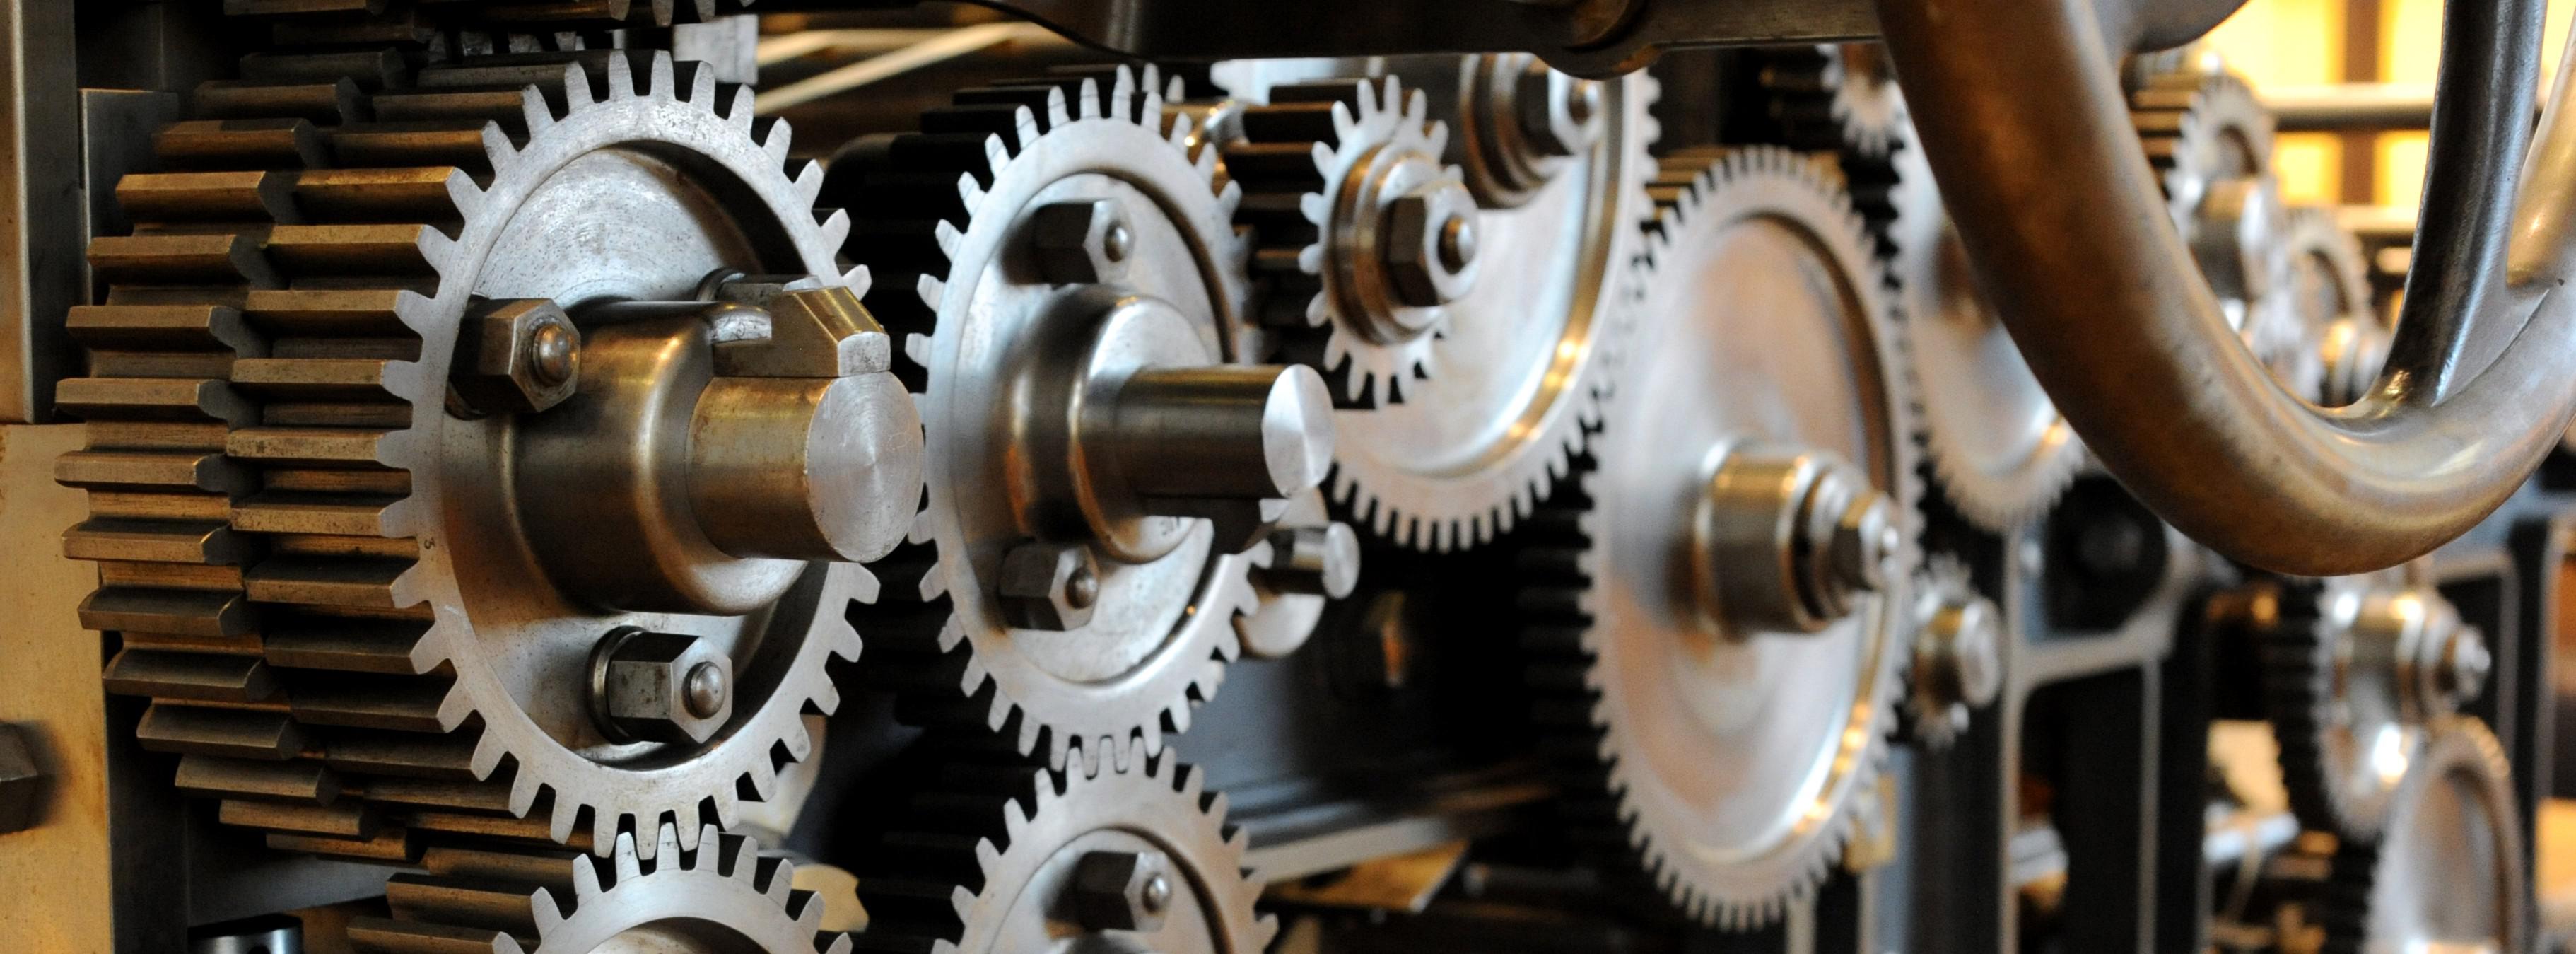 Close-up on the gears of Marinoni's printing machine